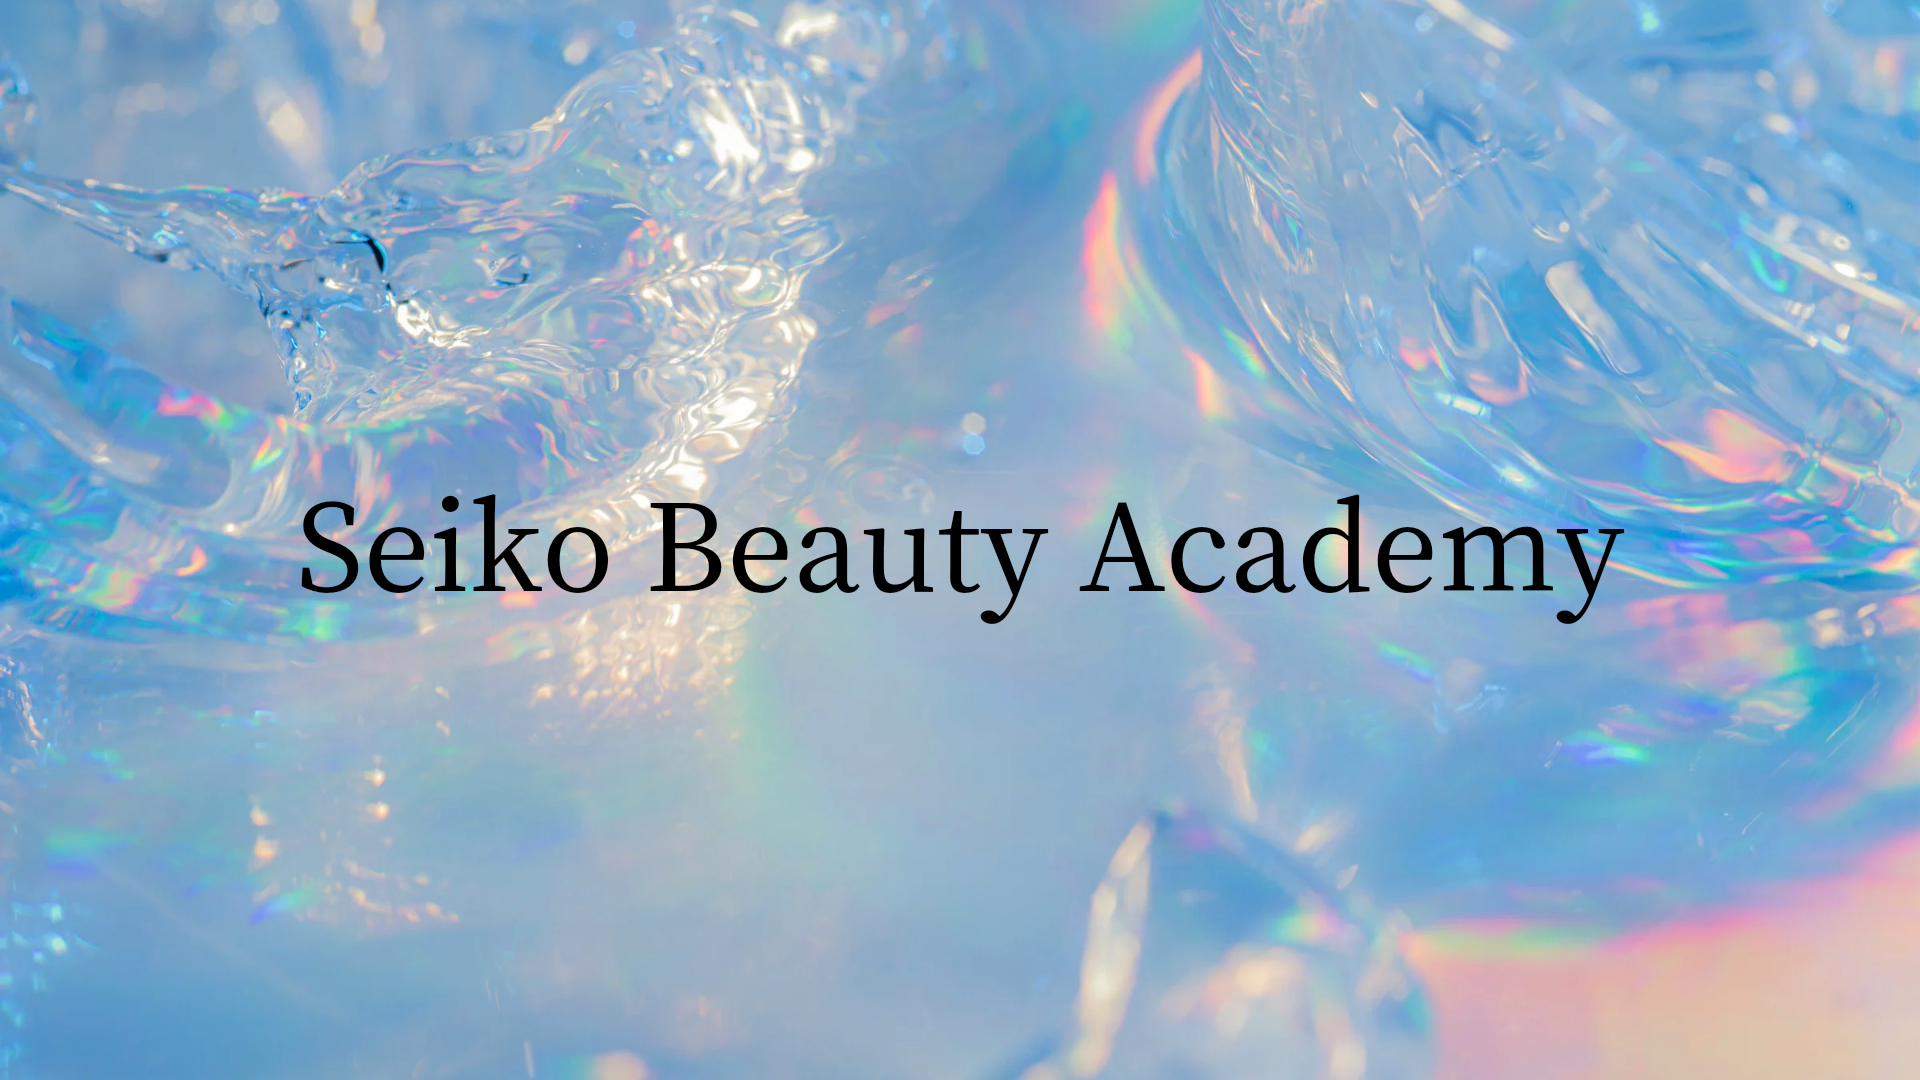 Seiko Beauty Academy